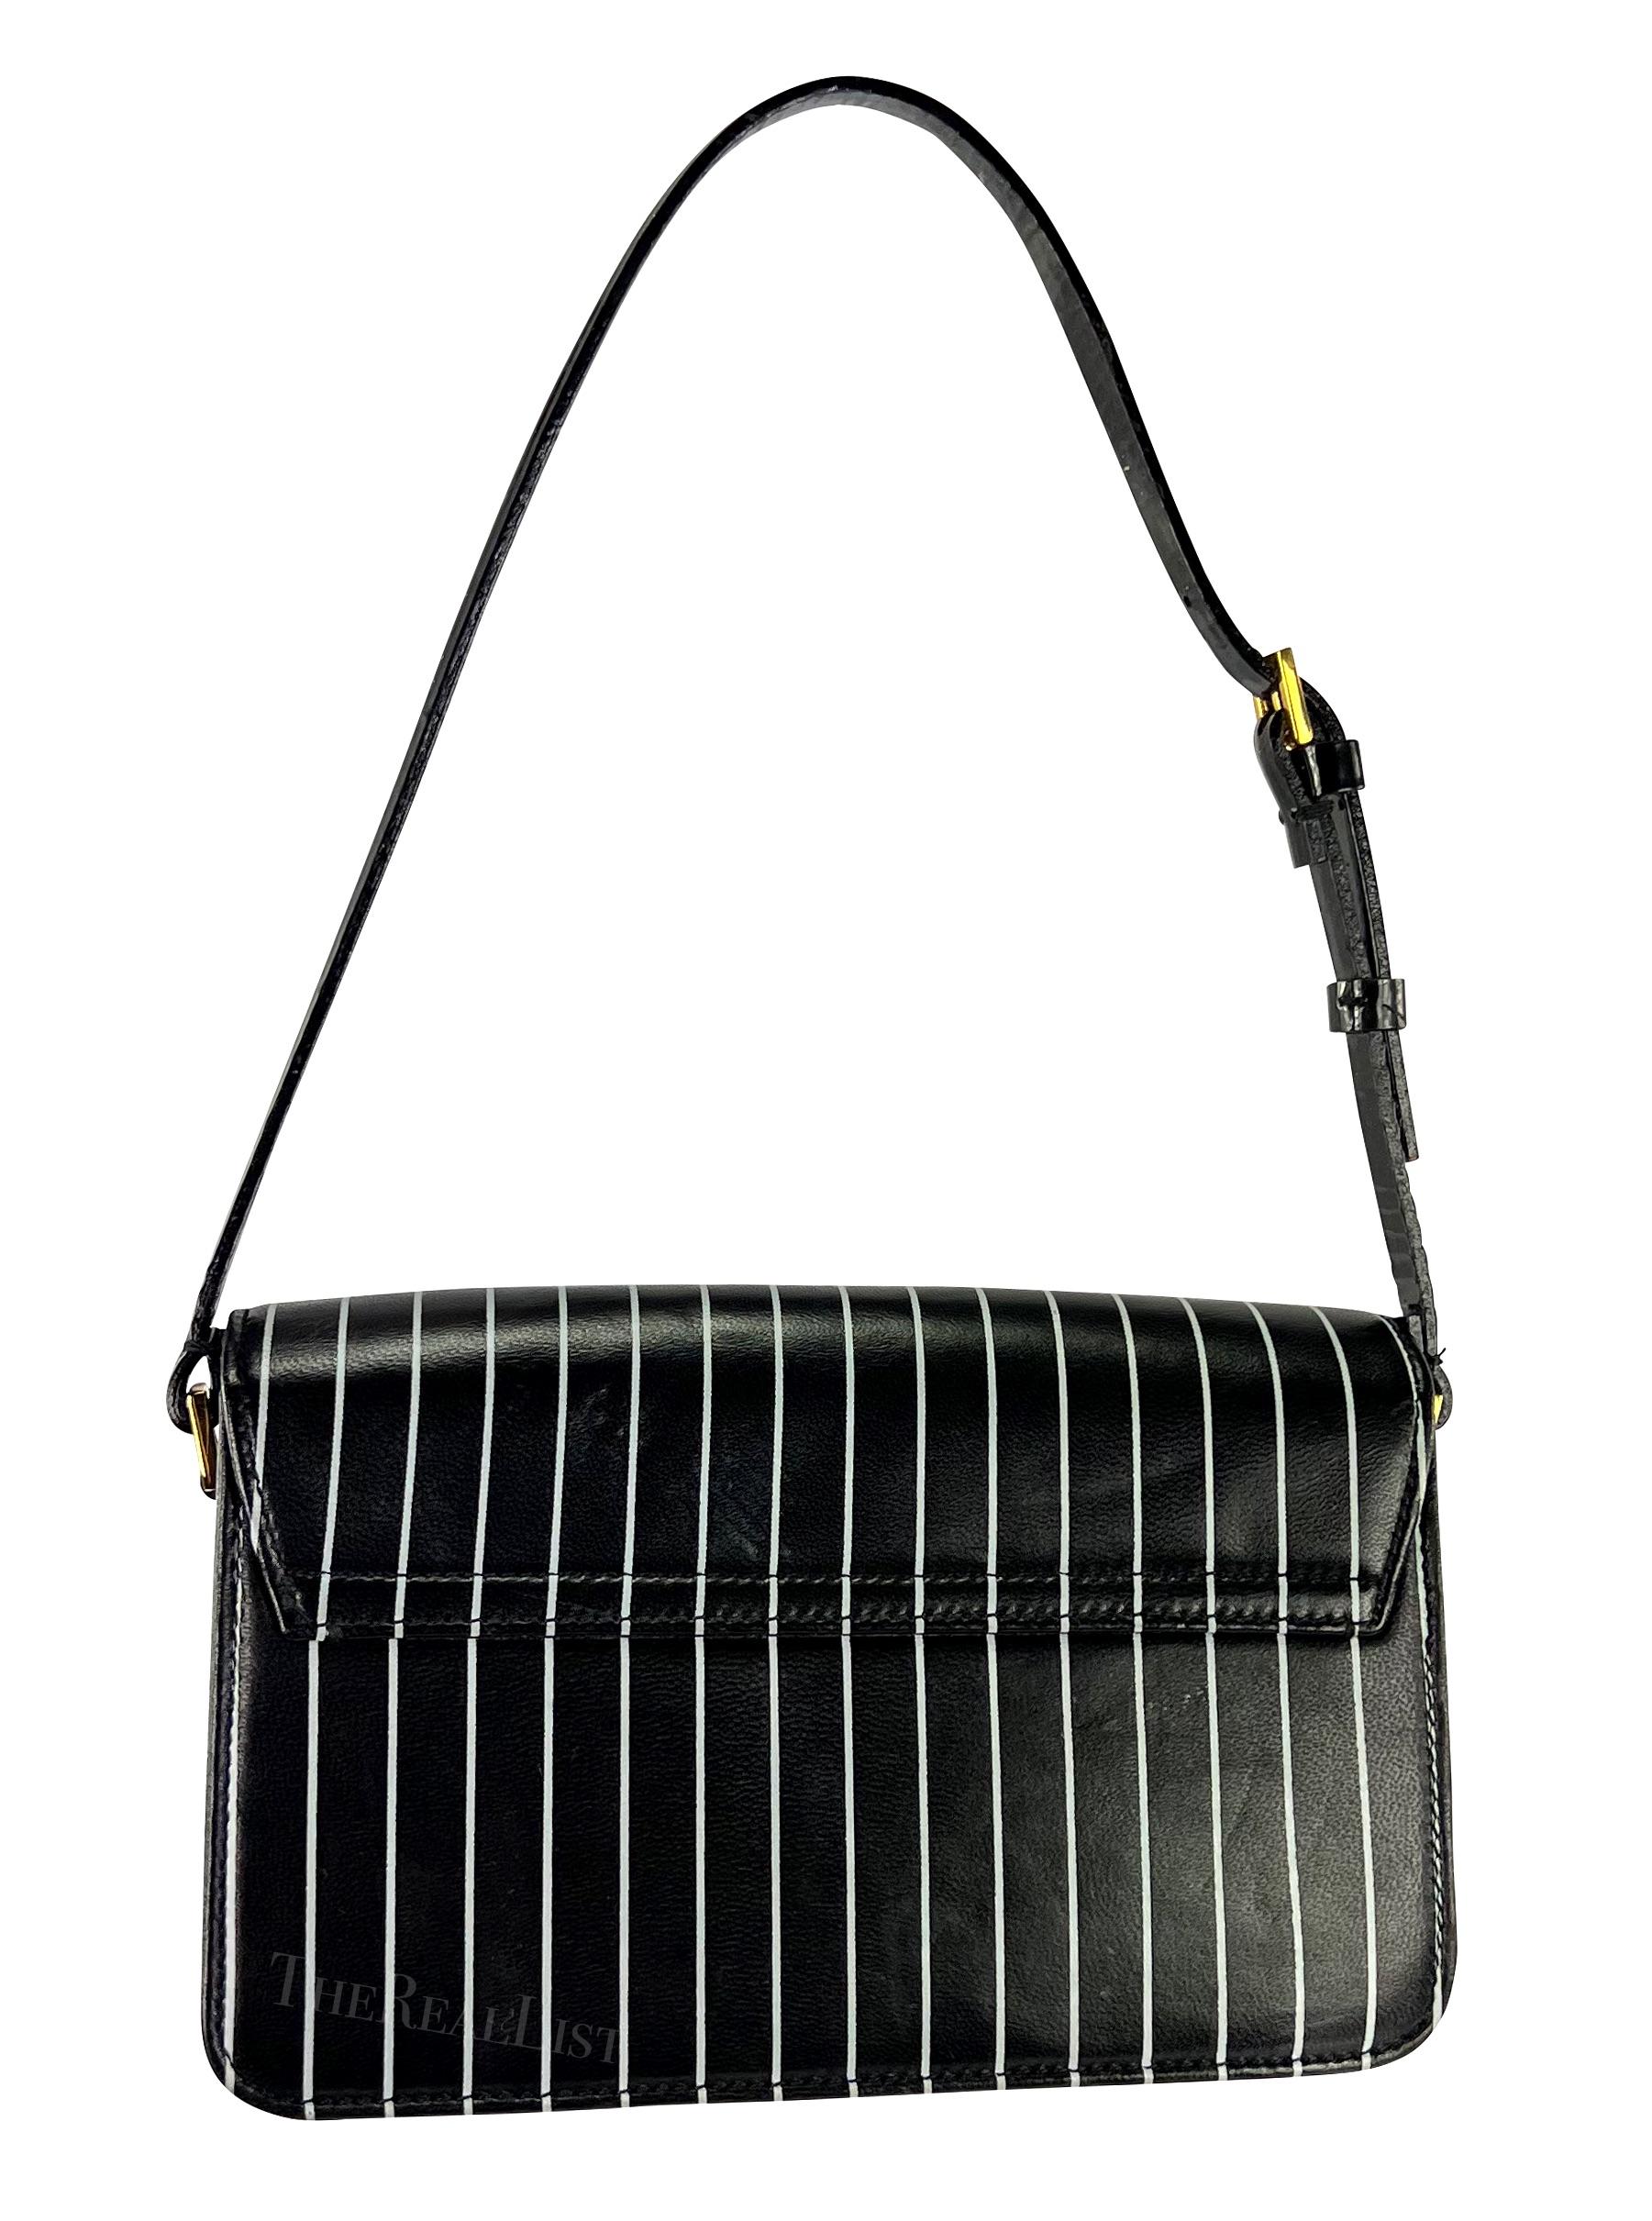 S/S 2001 Dolce & Gabbana Runway Black Pinstripe Leather Patent Mini Shoulder Bag For Sale 3